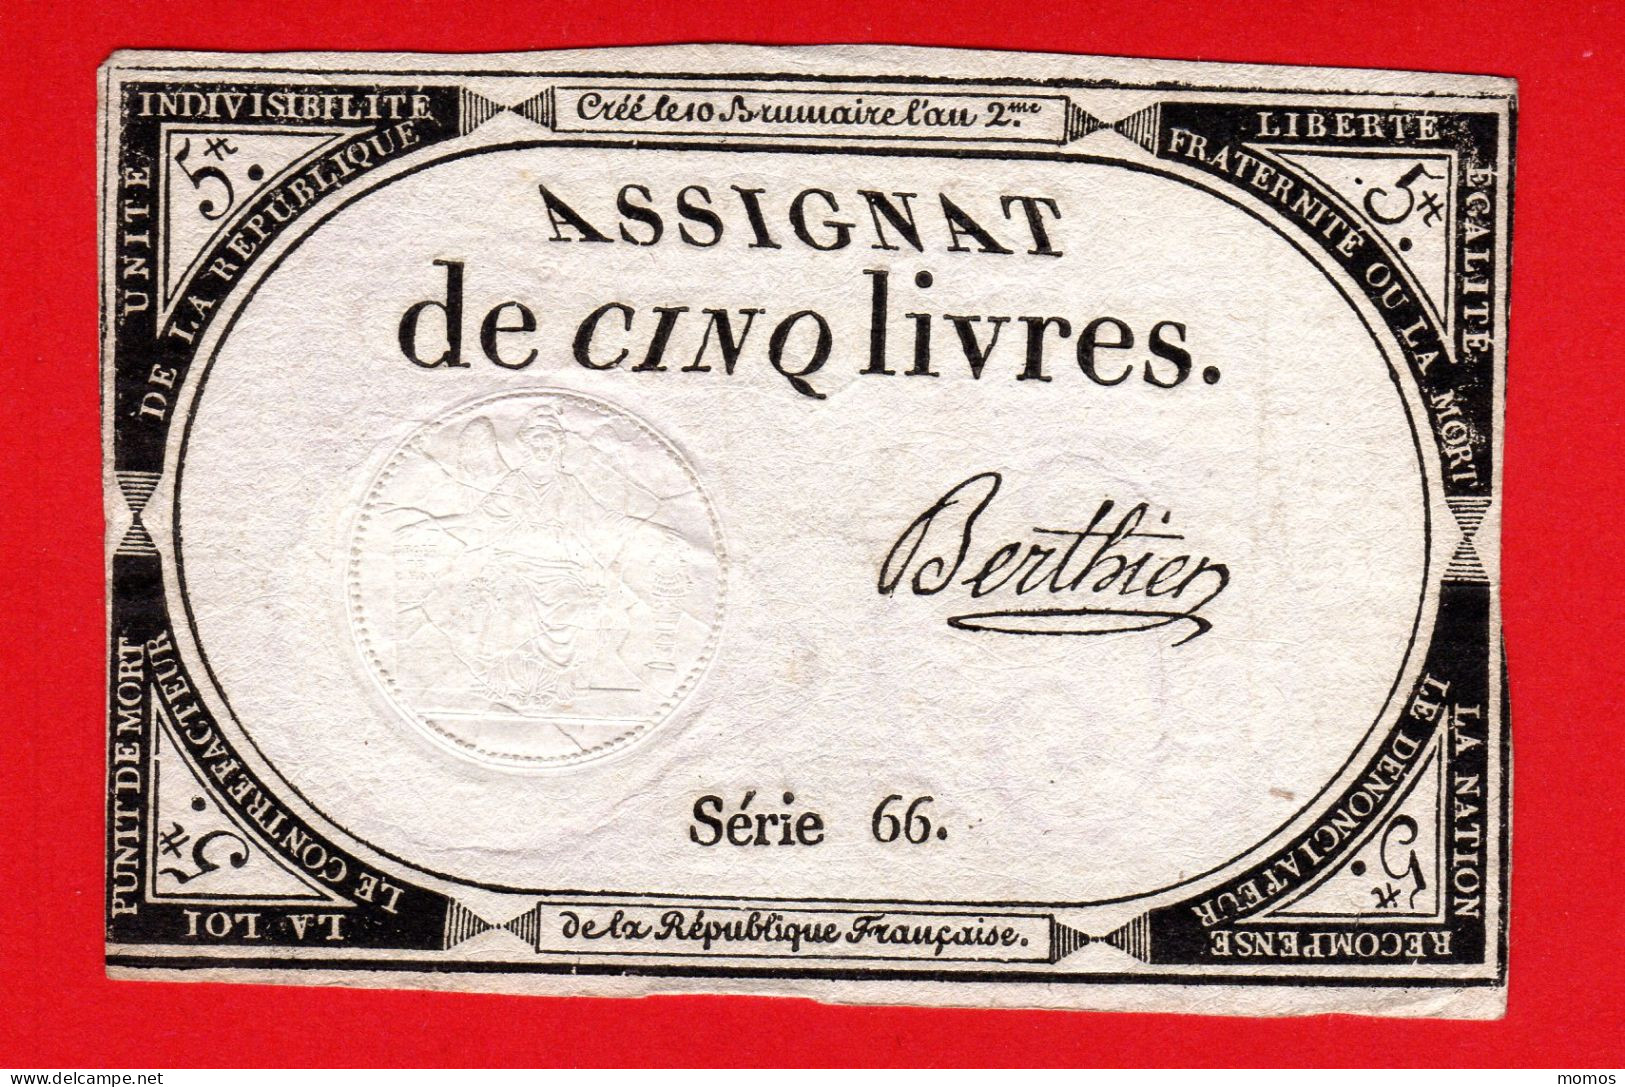 ASSIGNAT DE 5 LIVRES - 10 BRUMAIRE AN 2  (31 OCTOBRE 1793) - BERTHIER - REVOLUTION FRANCAISE  A - Assegnati